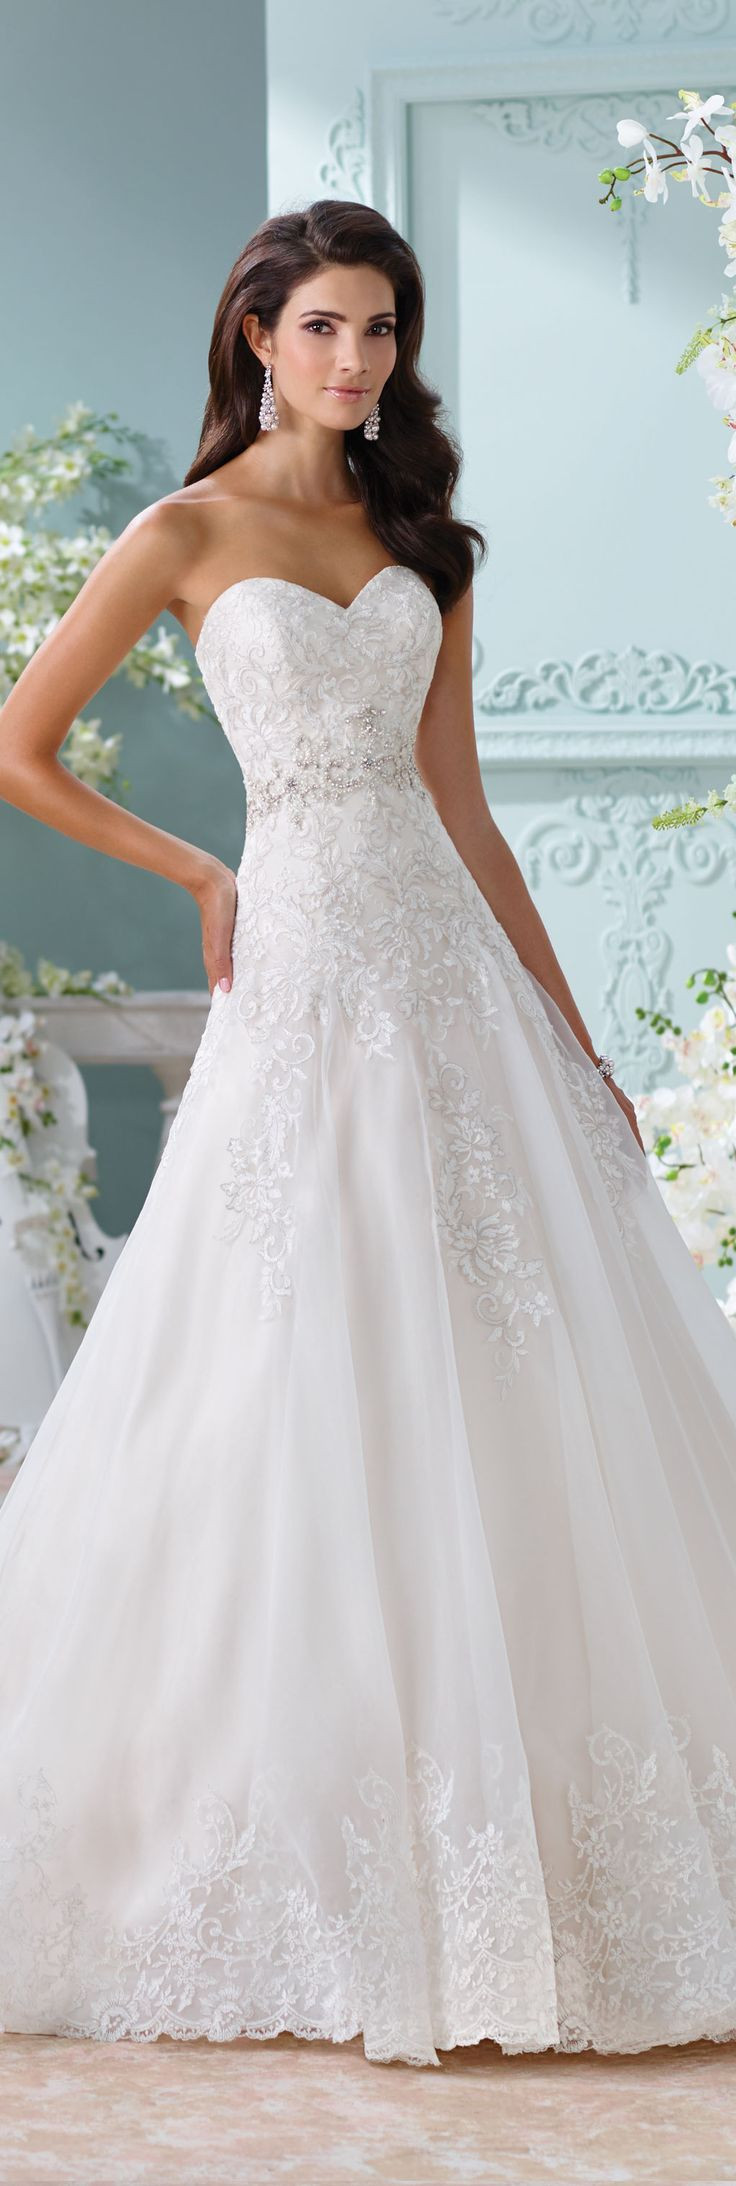 Lace Wedding Gowns Pinterest
 Best Aline Wedding Dress Lace Ideas Pinterest Aline